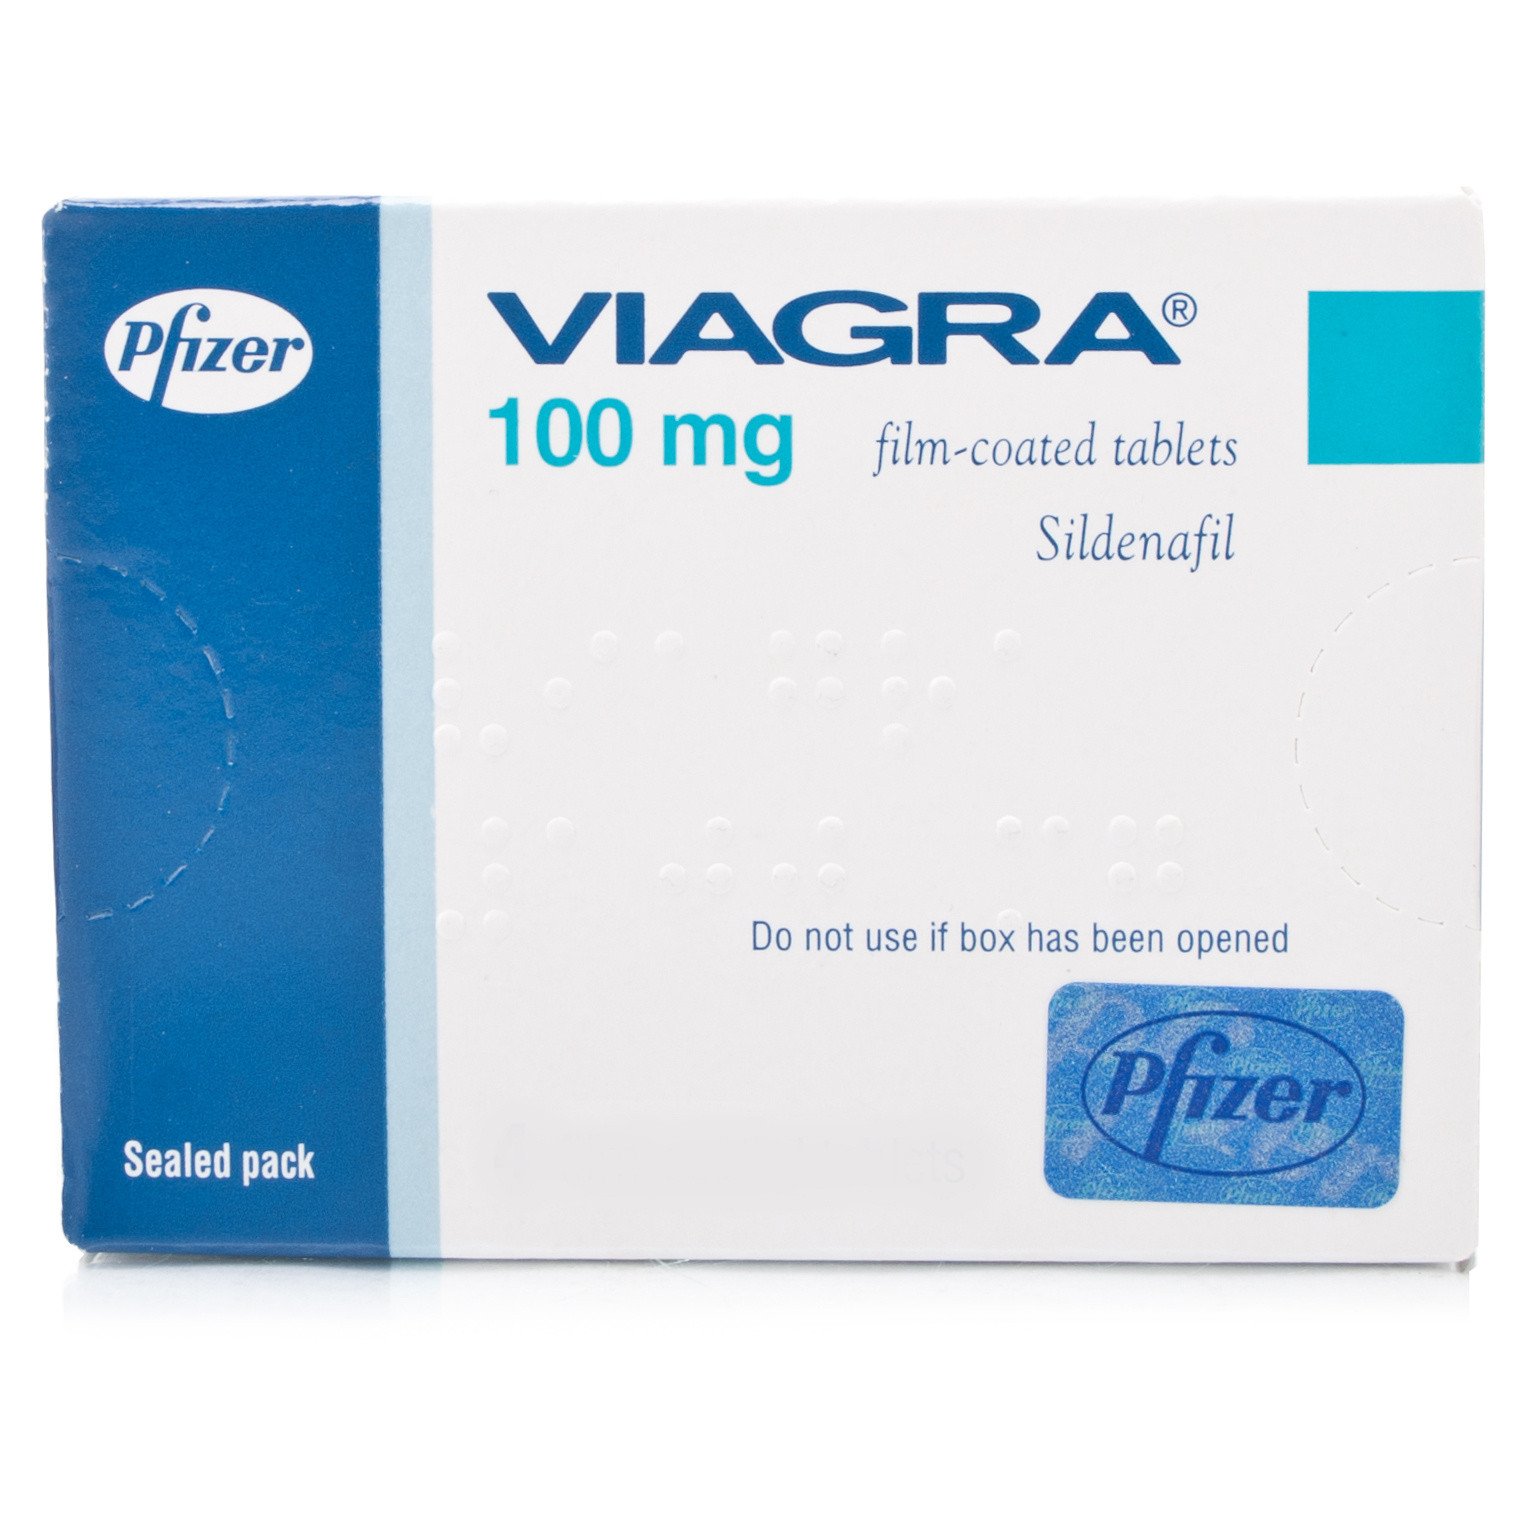 Viagra 100mg Tablet Film Coated Tablet Sildenafil 1090